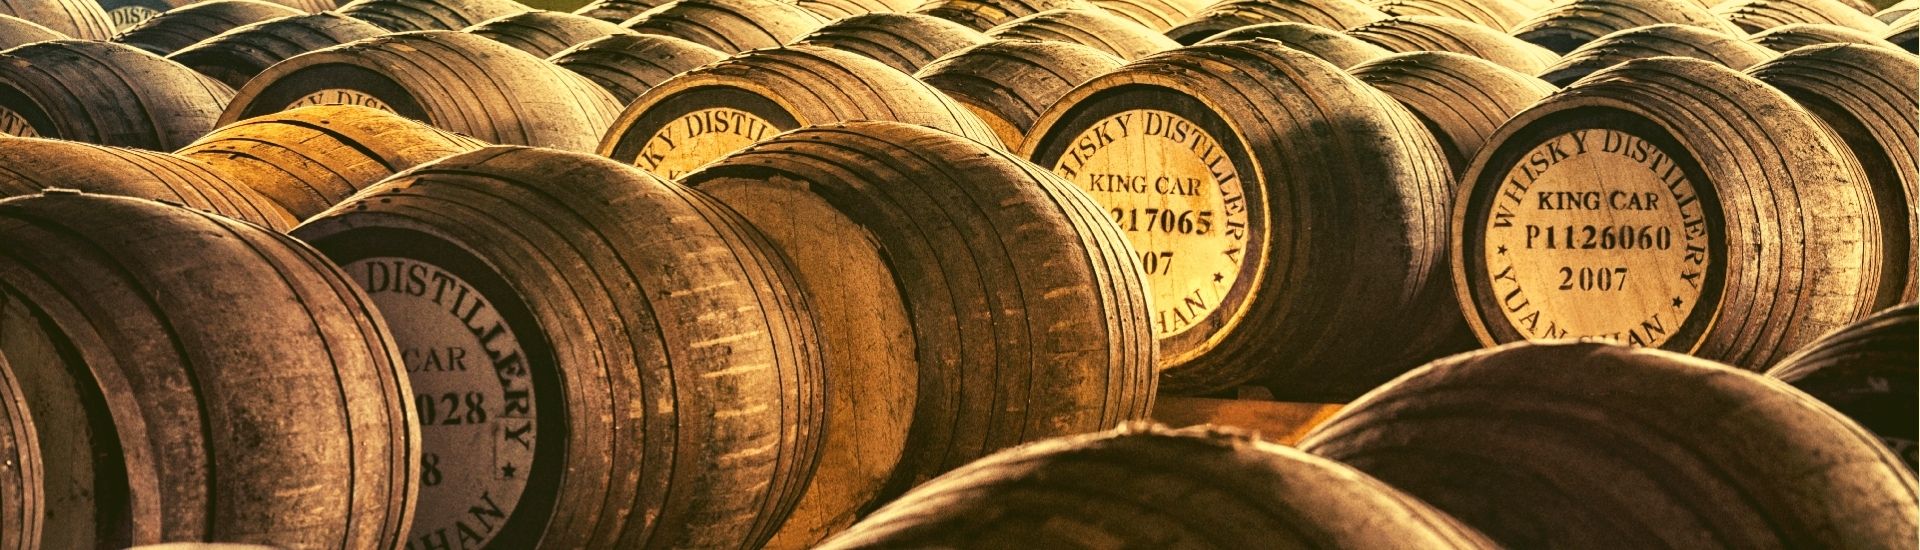 kavalan whiskey on barrels